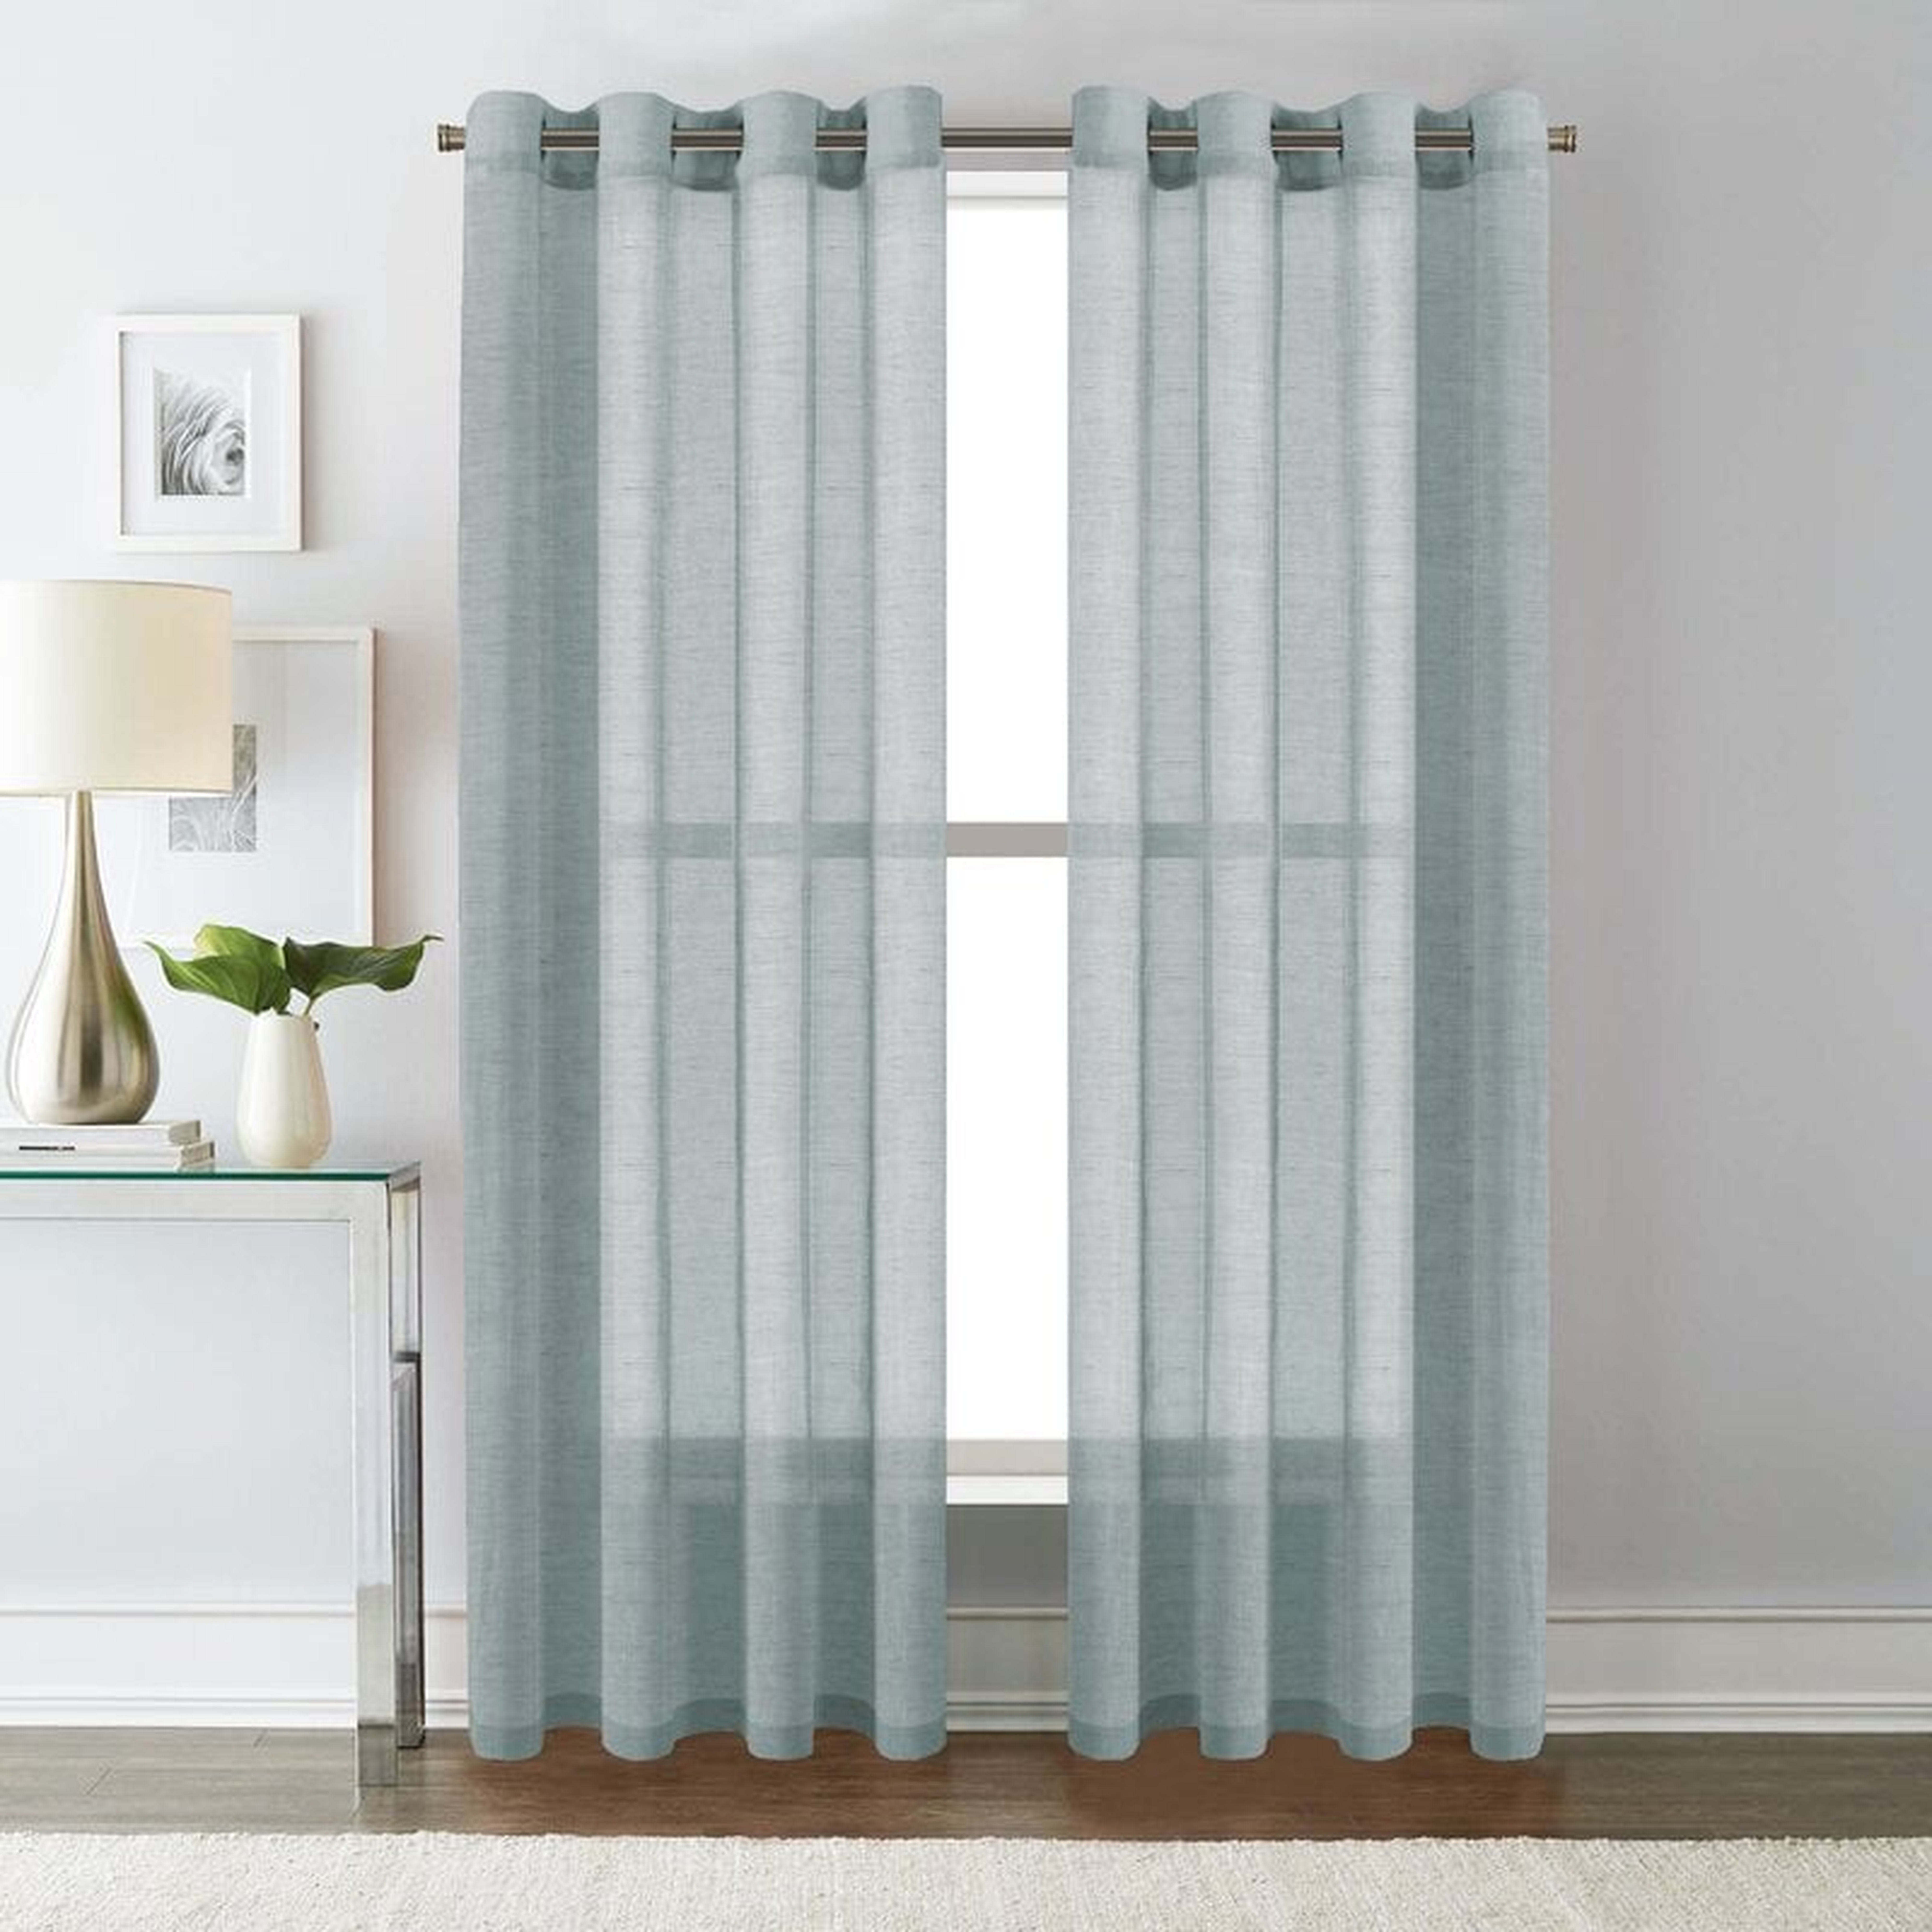 Dawan Linen Solid Color Semi-Sheer Gromment Curtain Panels (Set of 2) / Teal - Wayfair